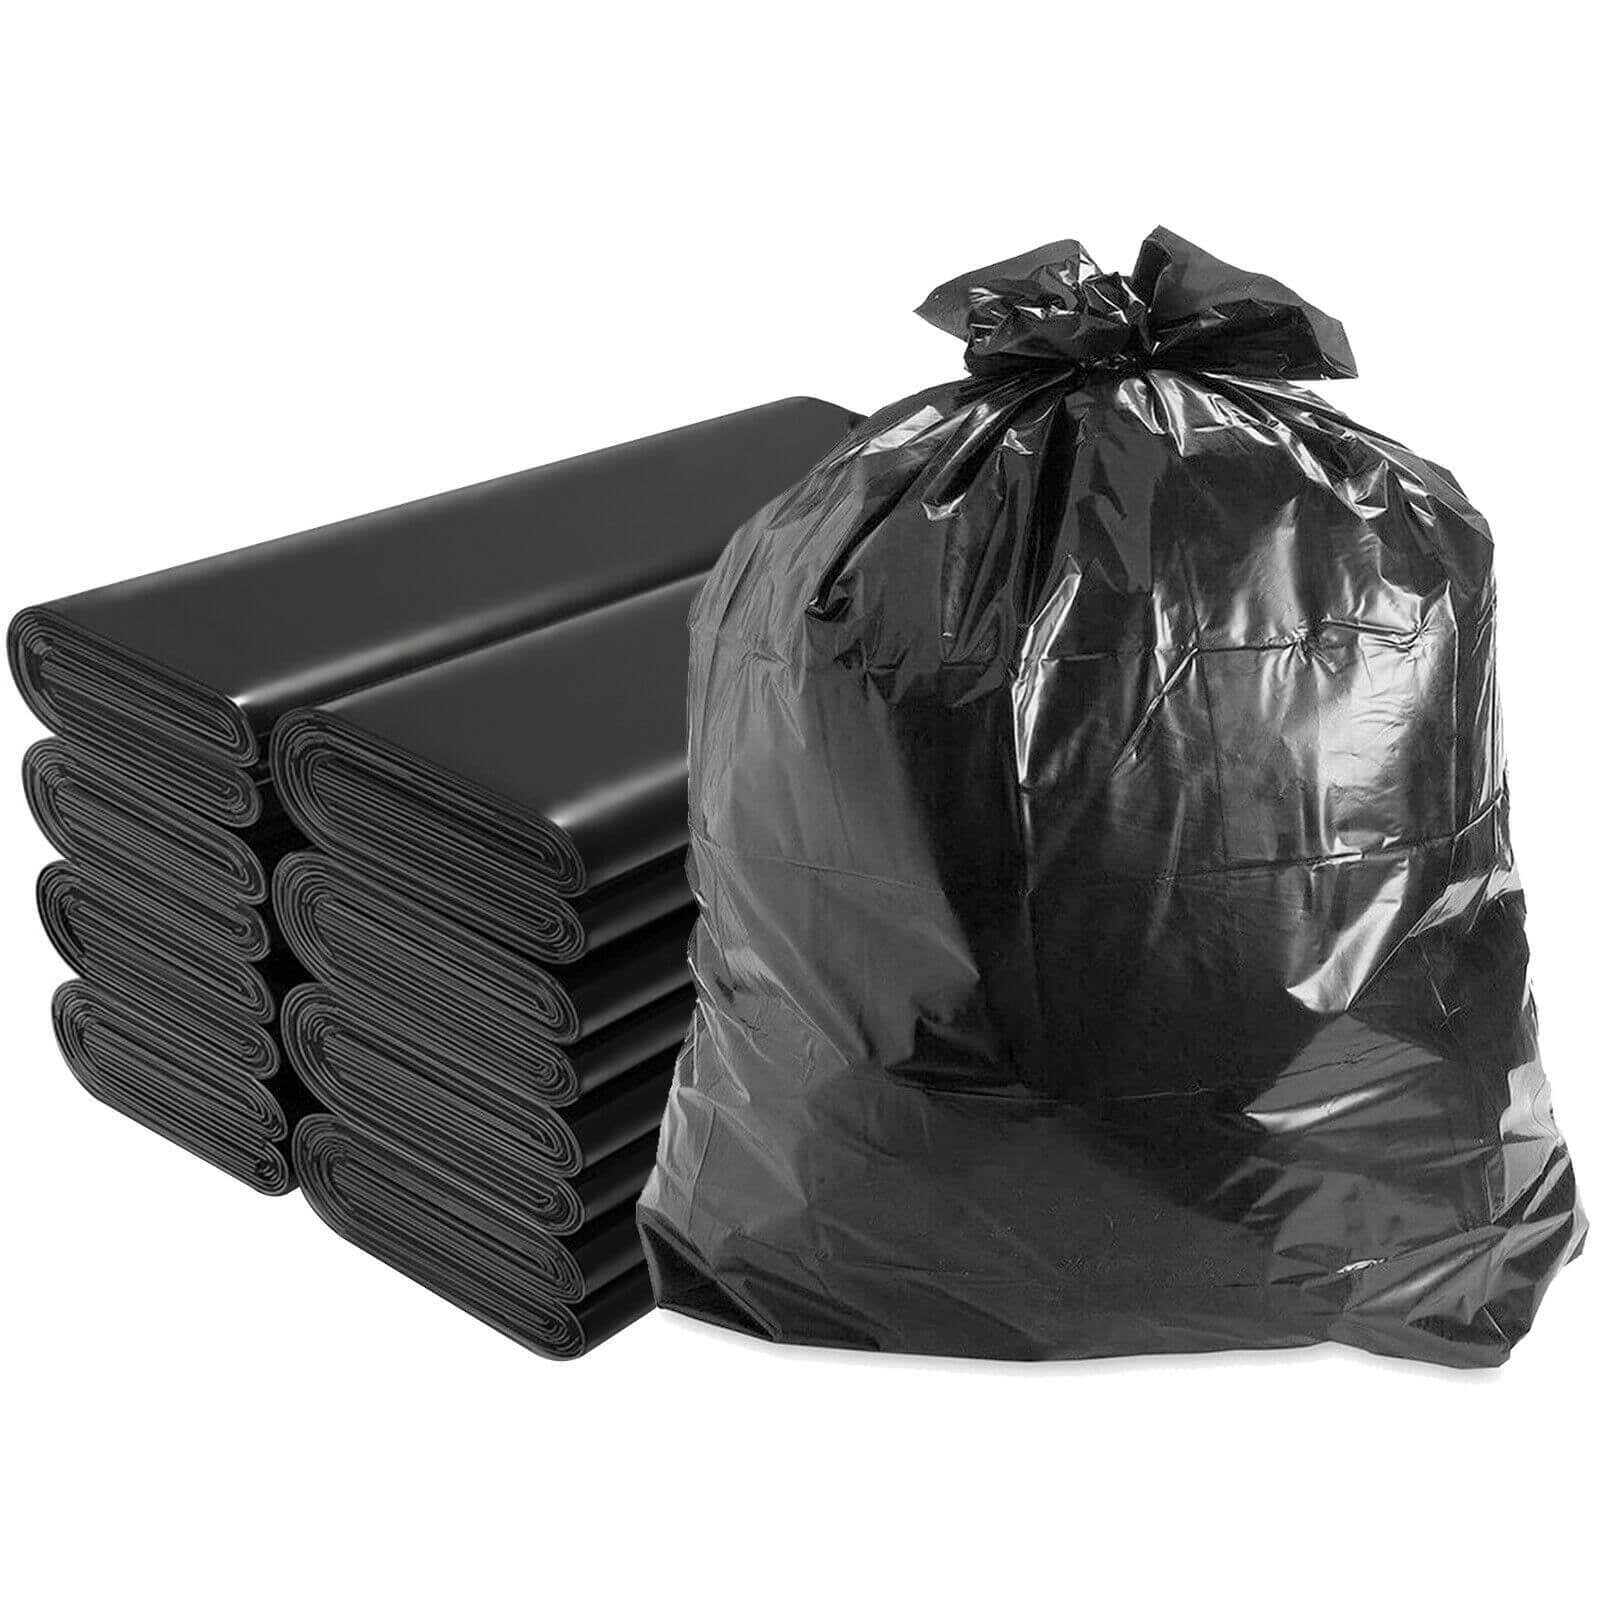 PlasticMill 95 Gallon Contractor Bags: Black, 3 mil, 61x68, 10 Bags.